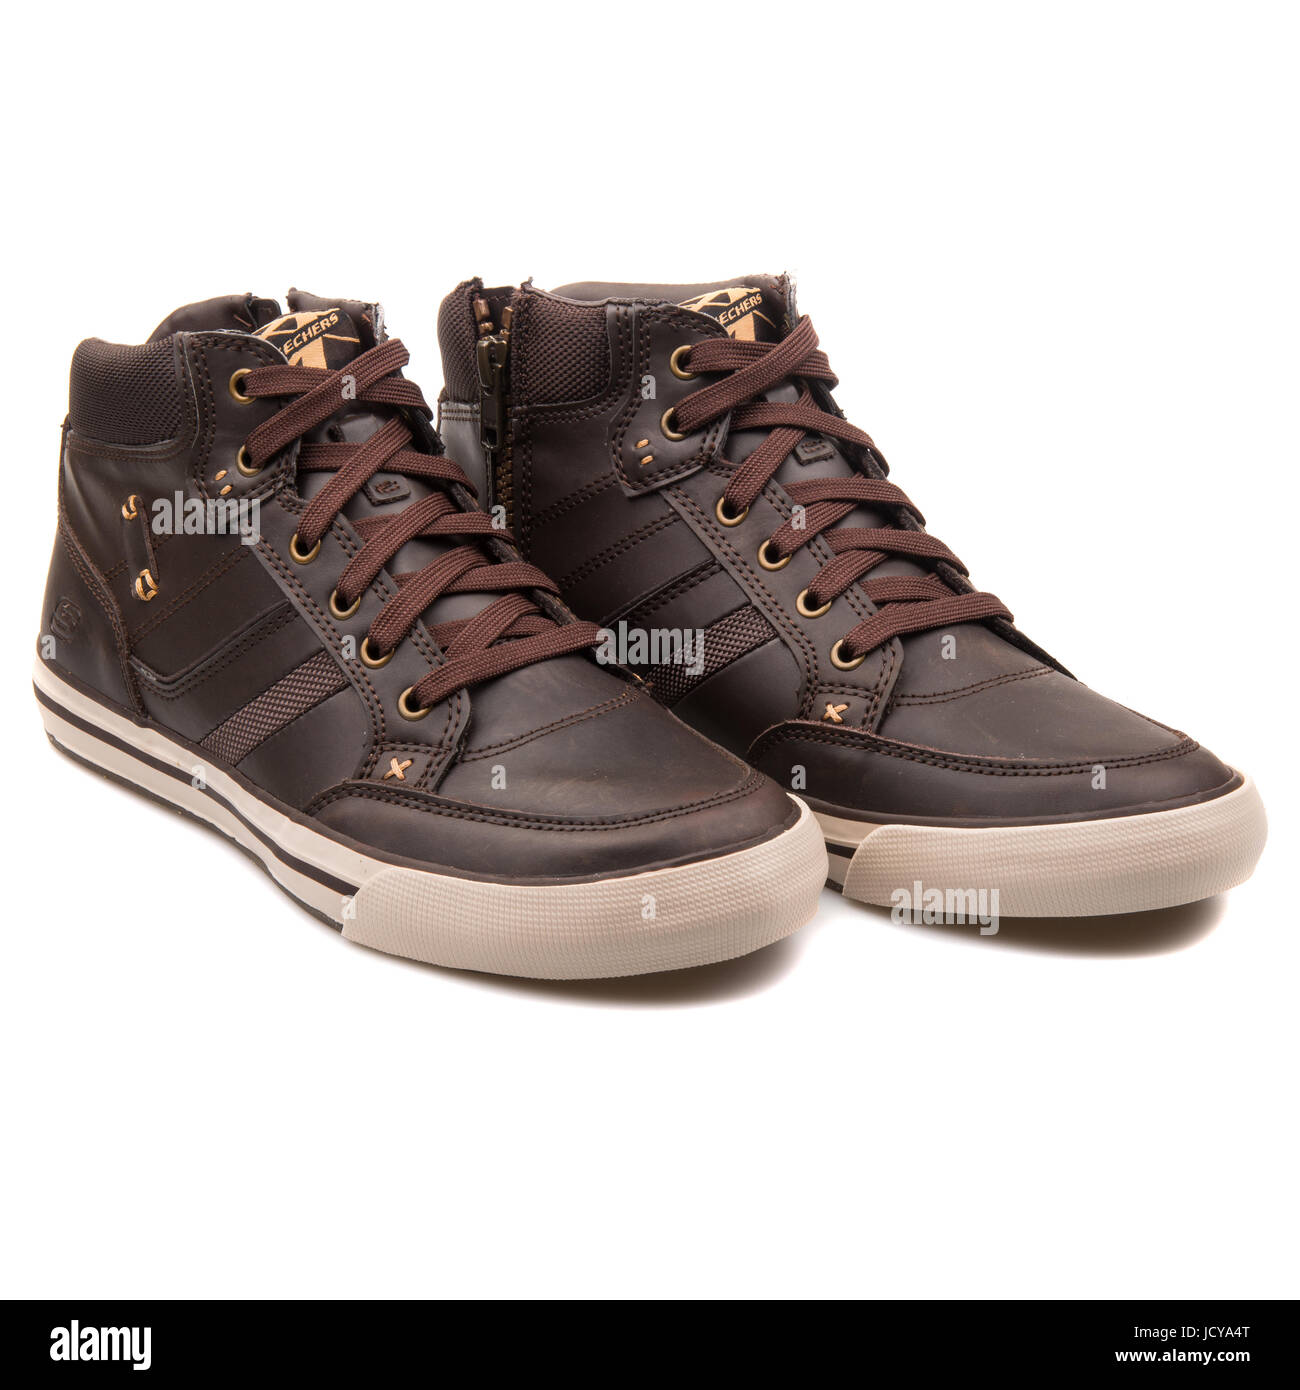 Skechers Planfix Cogent Chocolate Brown Boy's Leather Shoes - 93693L-CHOC  Stock Photo - Alamy